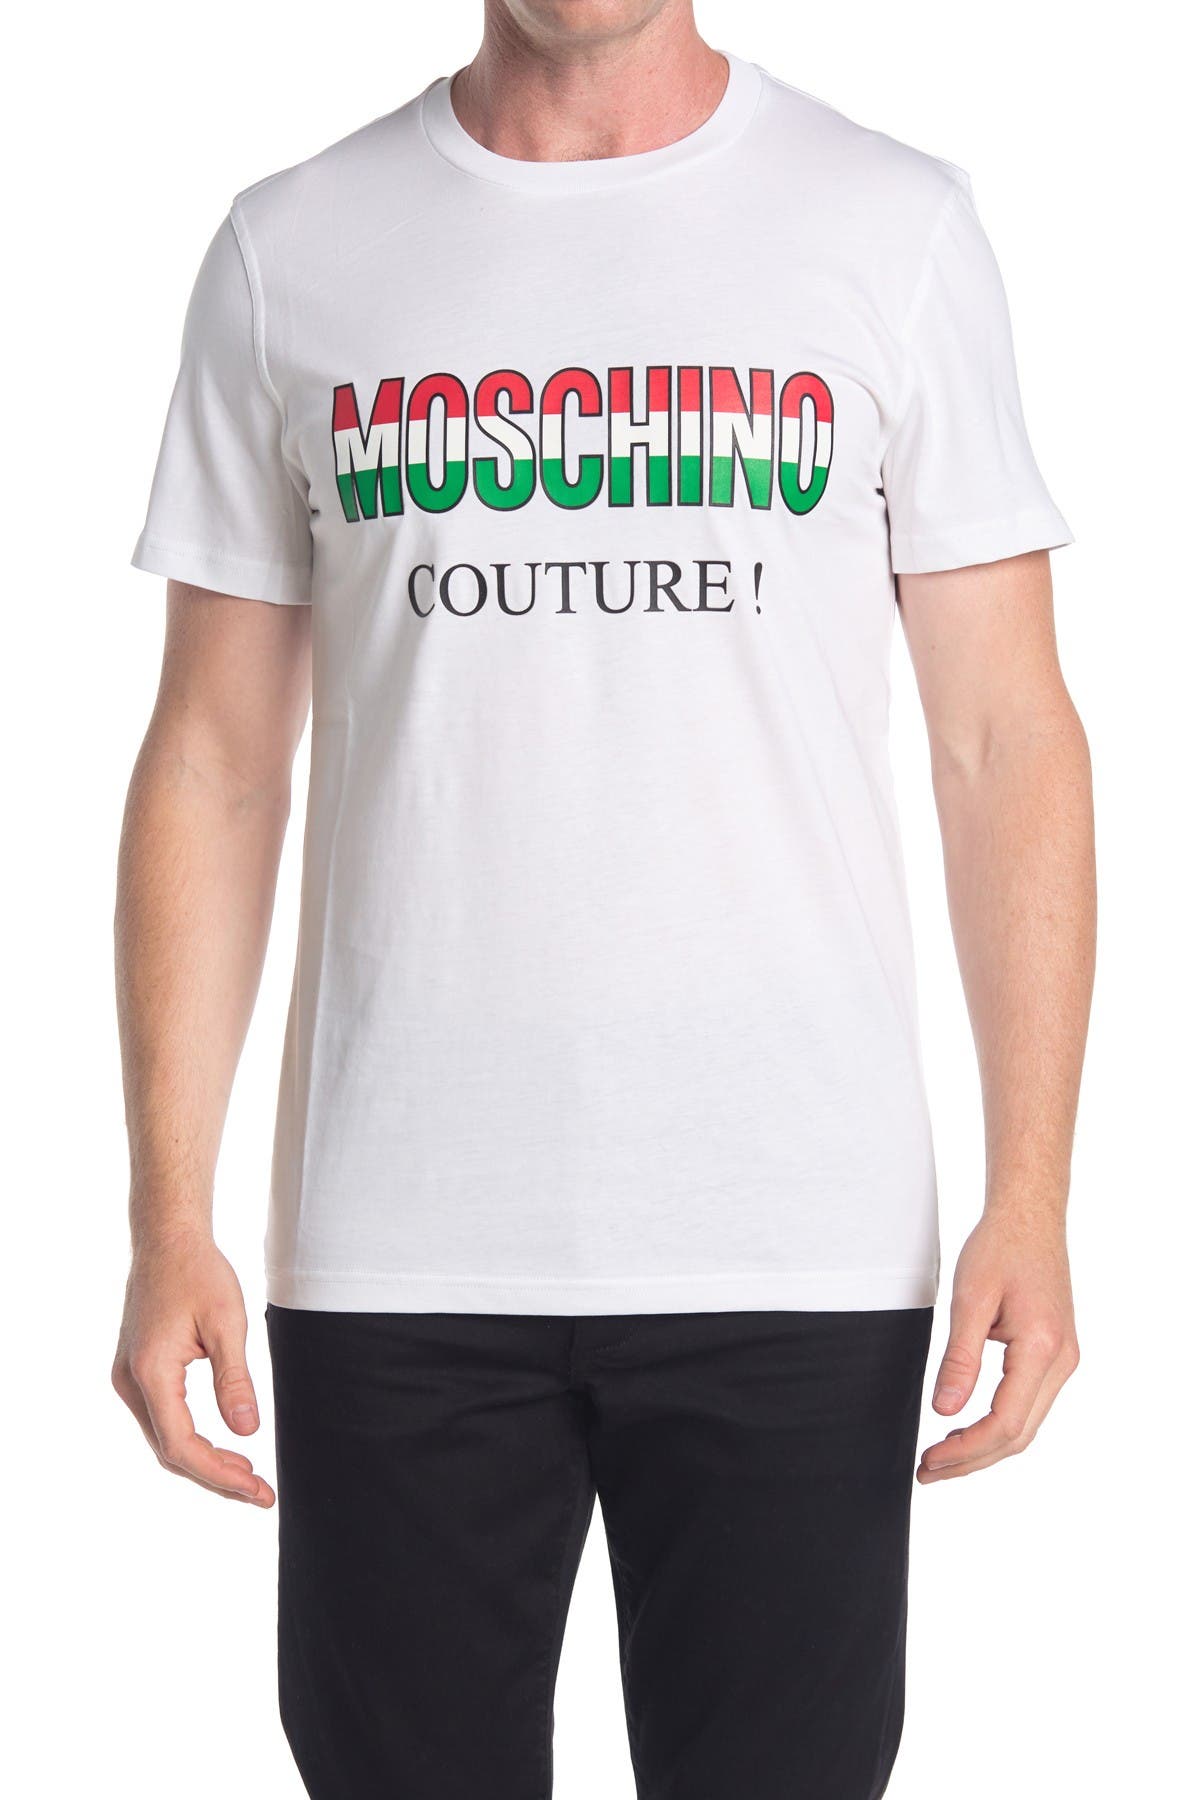 moschino couture t shirt